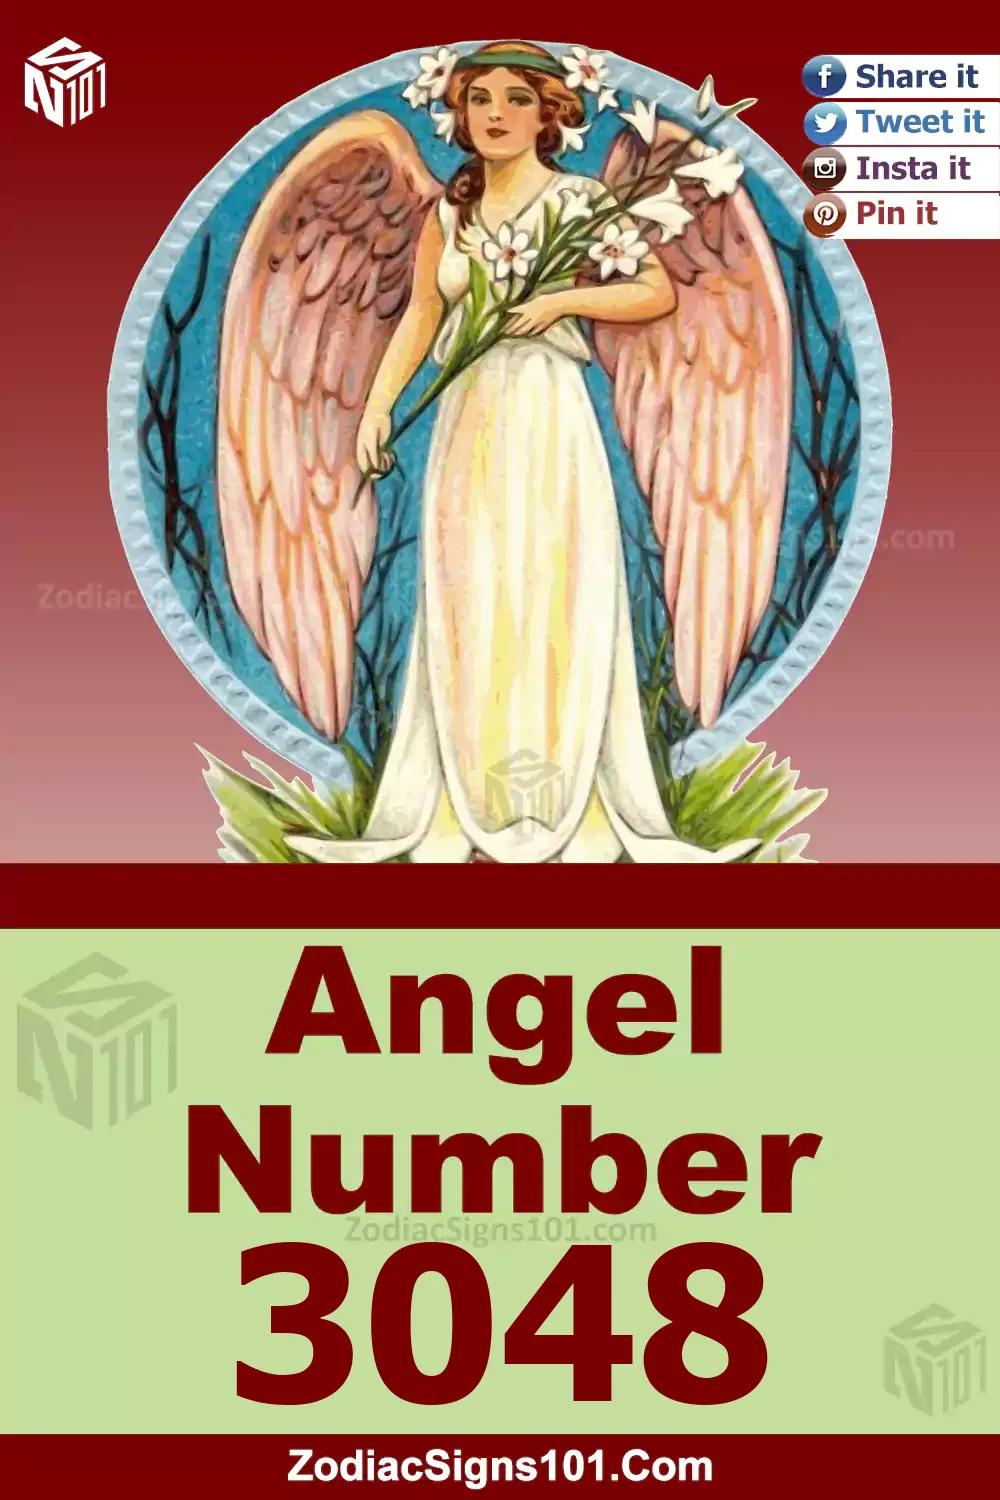 3048-Angel-Number-Meaning.jpg